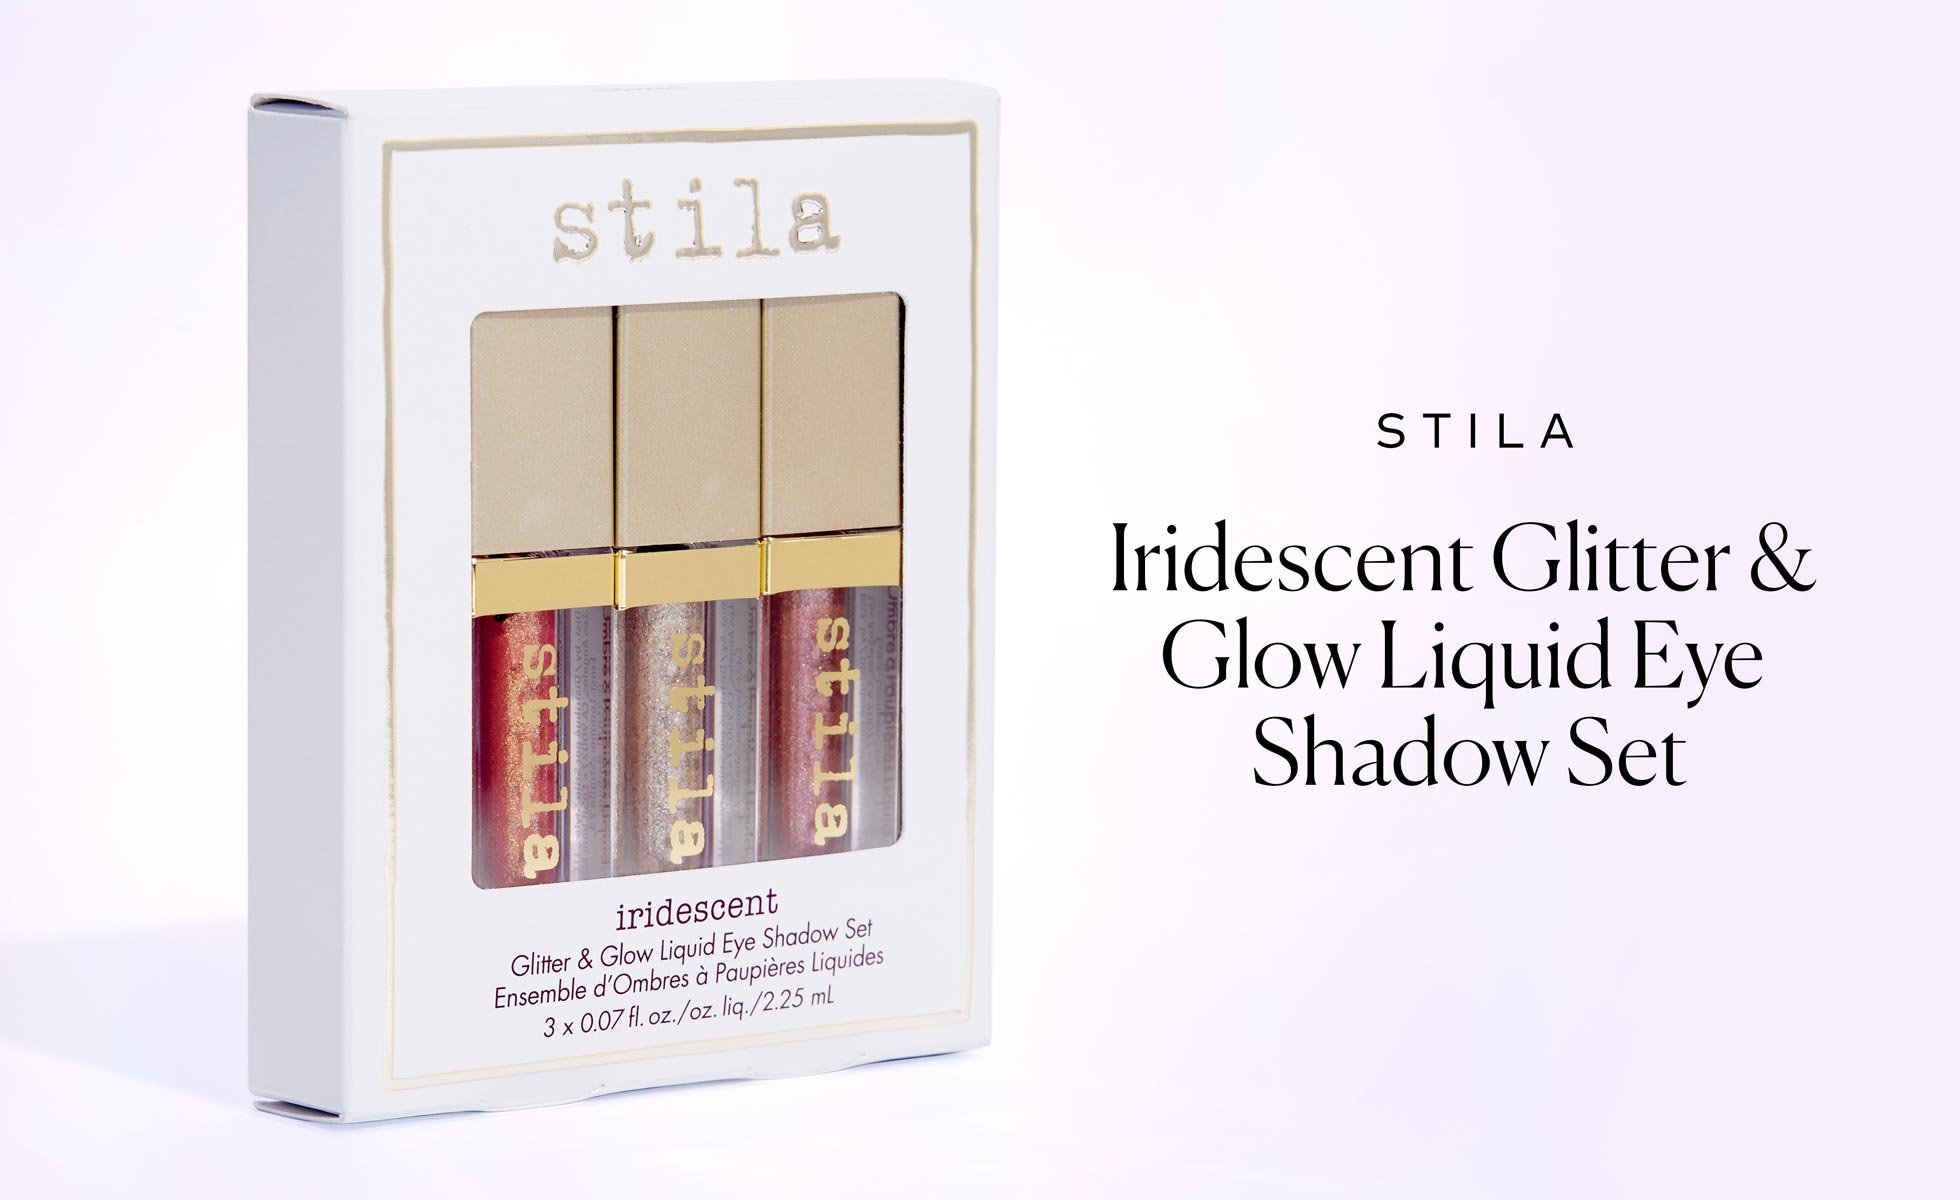 Stila Iridescent Glitter & Glow Liquid Eye Shadow Set